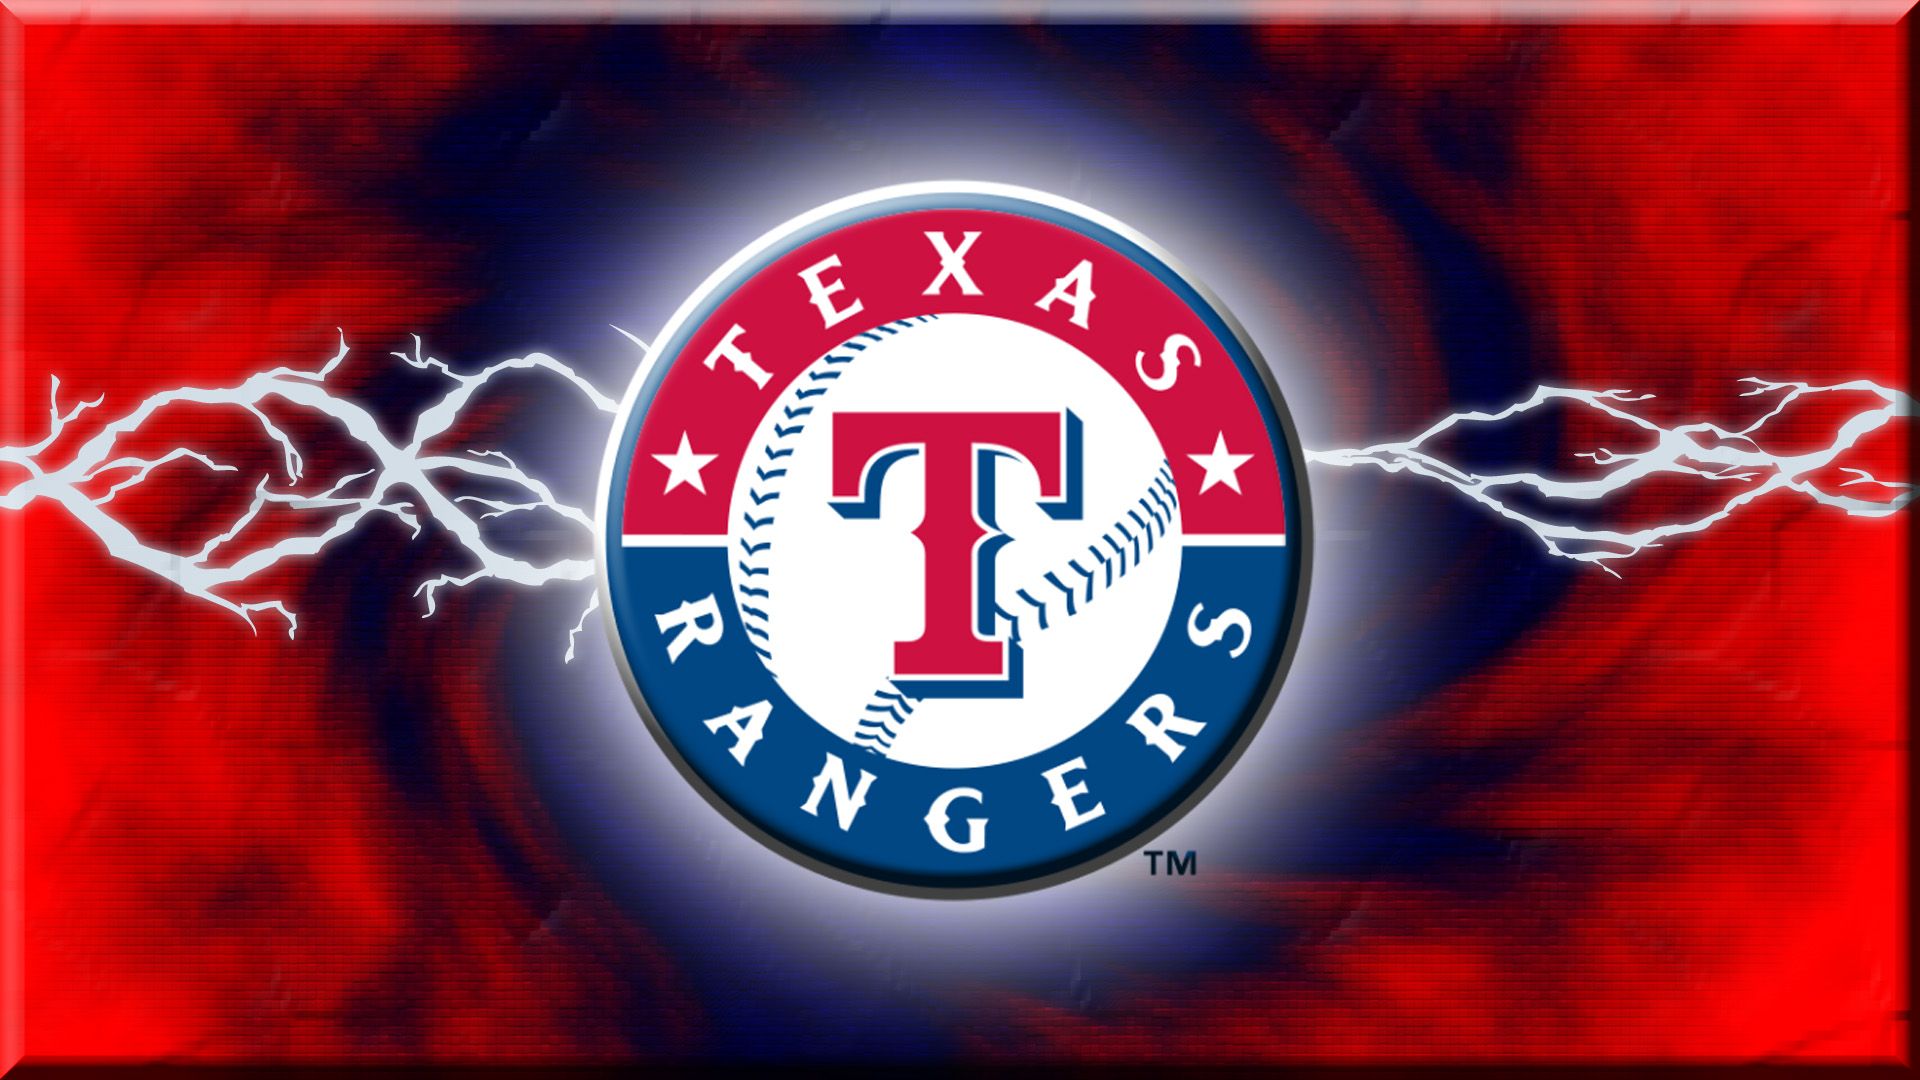 Texas Rangers Baseball. Texas rangers tickets, Texas rangers baseball, Texas rangers